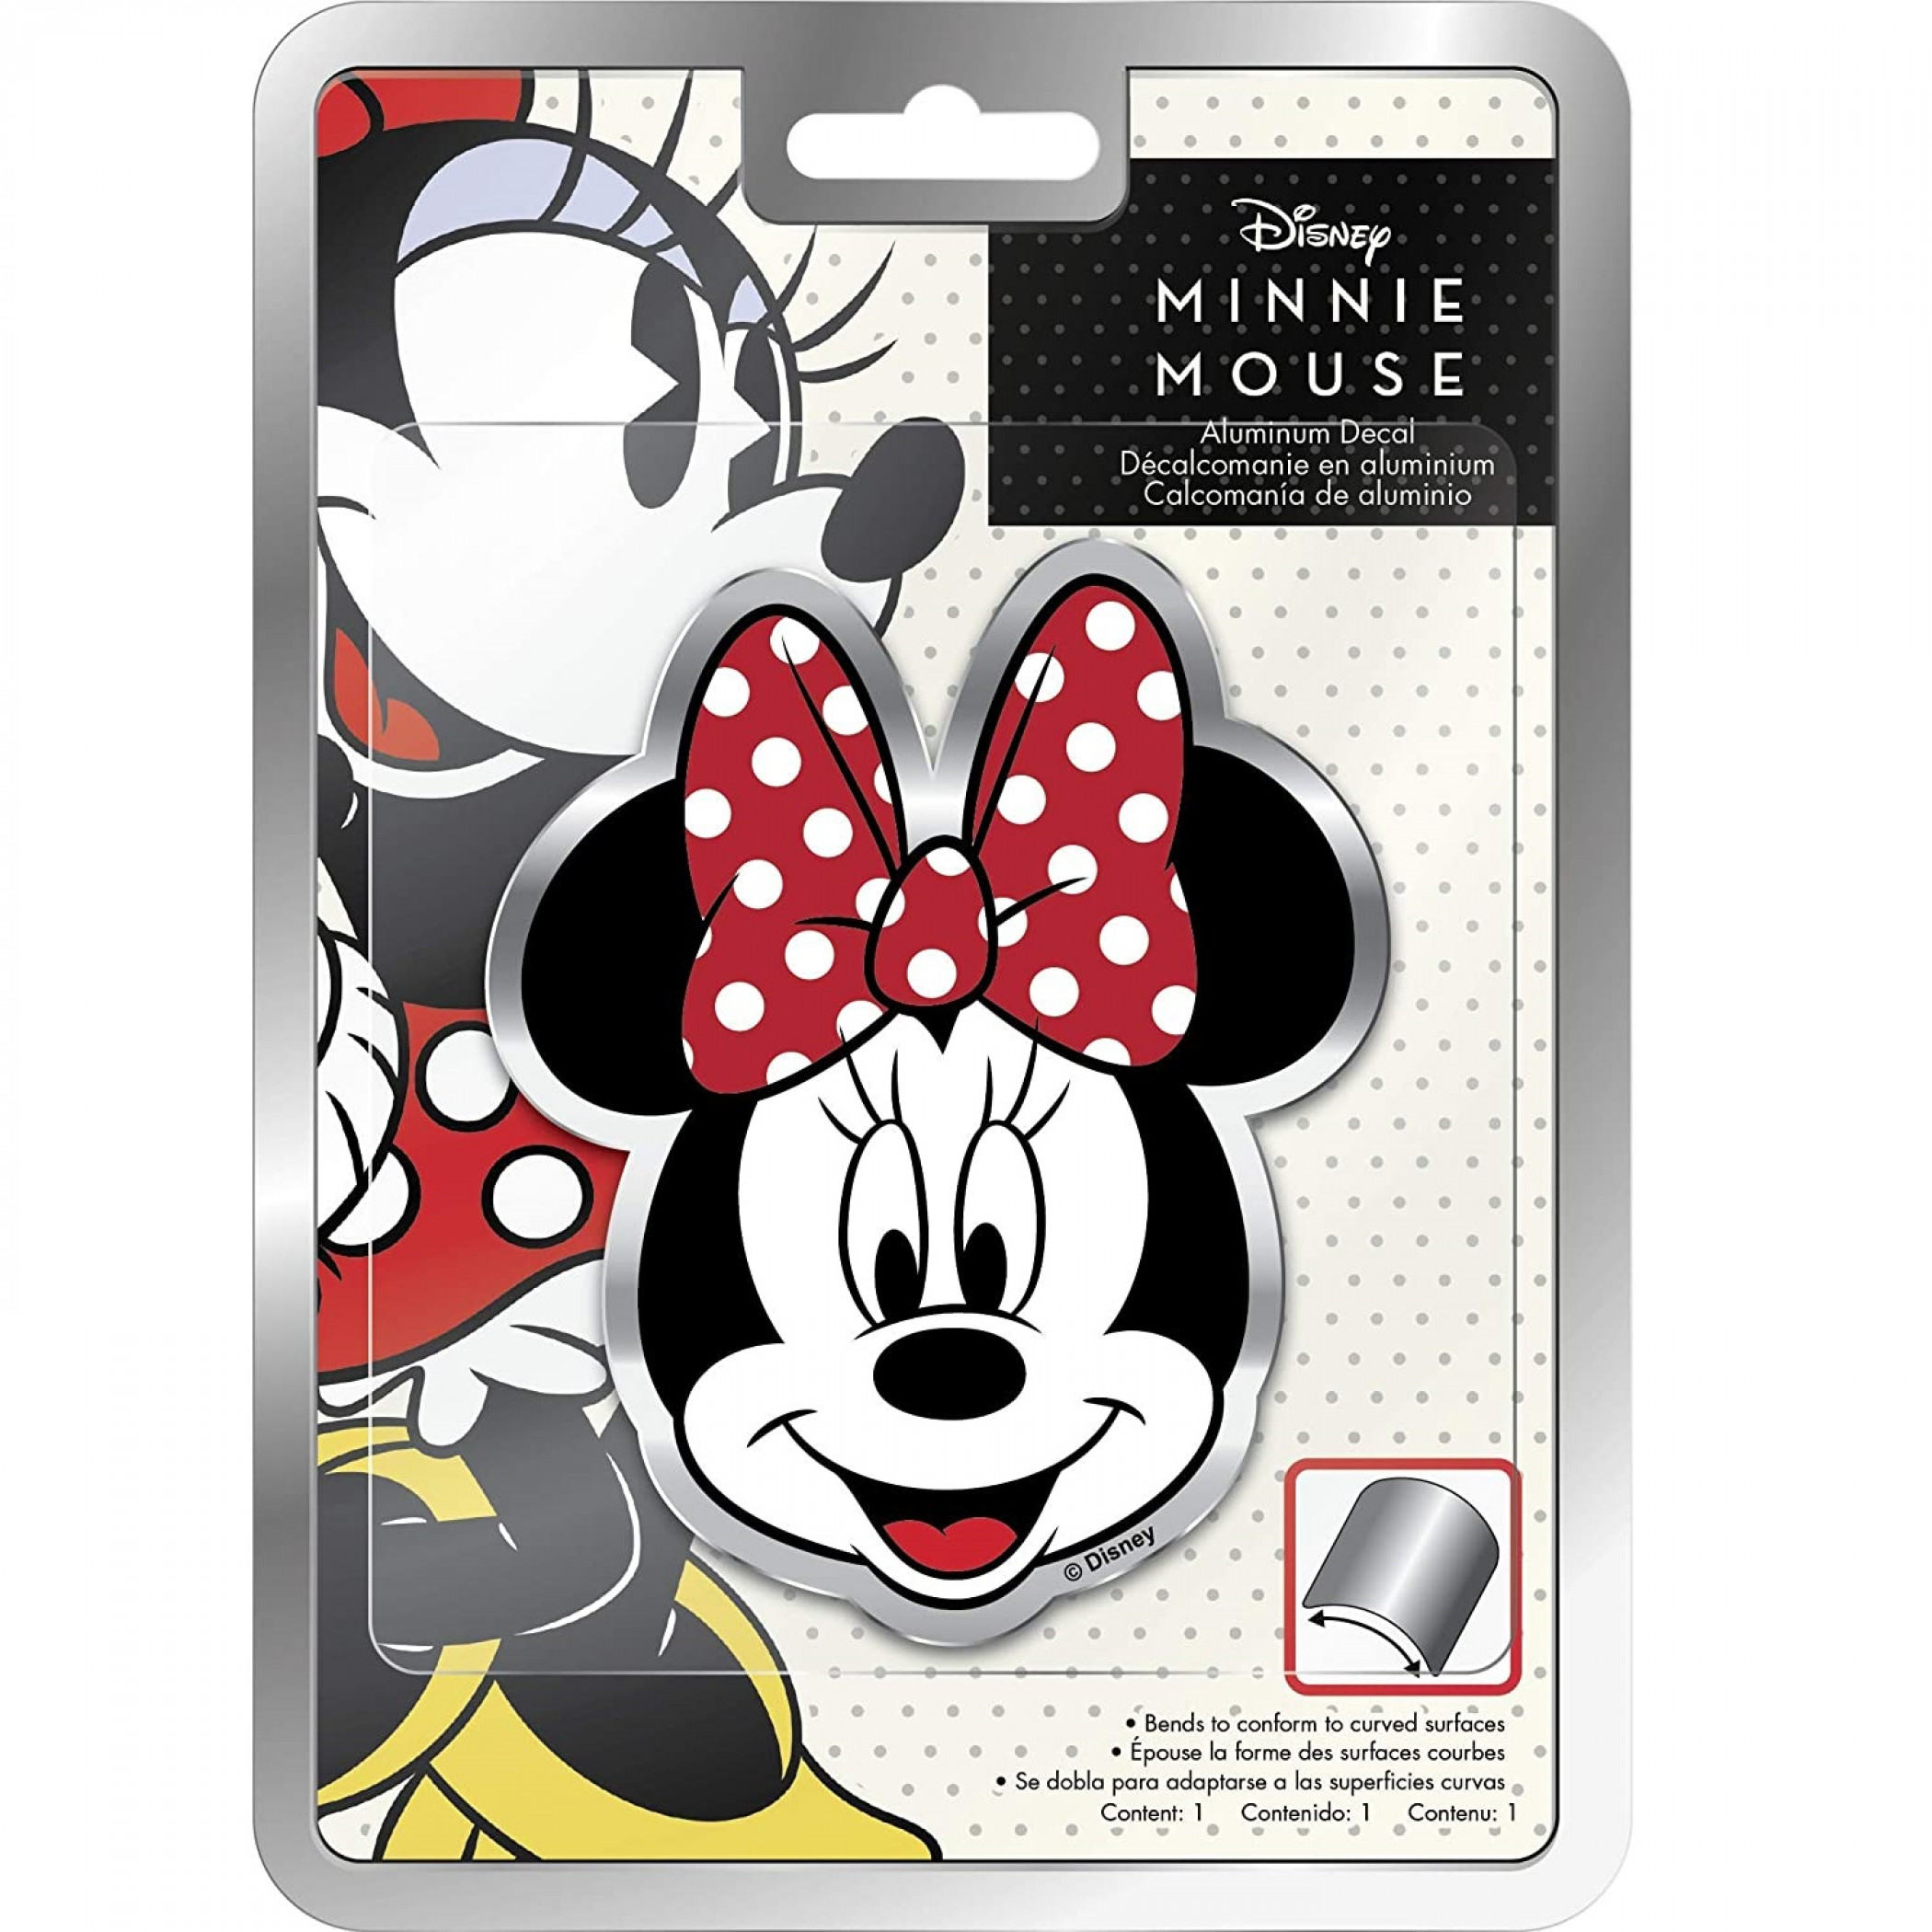 Disney Minnie Mouse Aluminum Decal